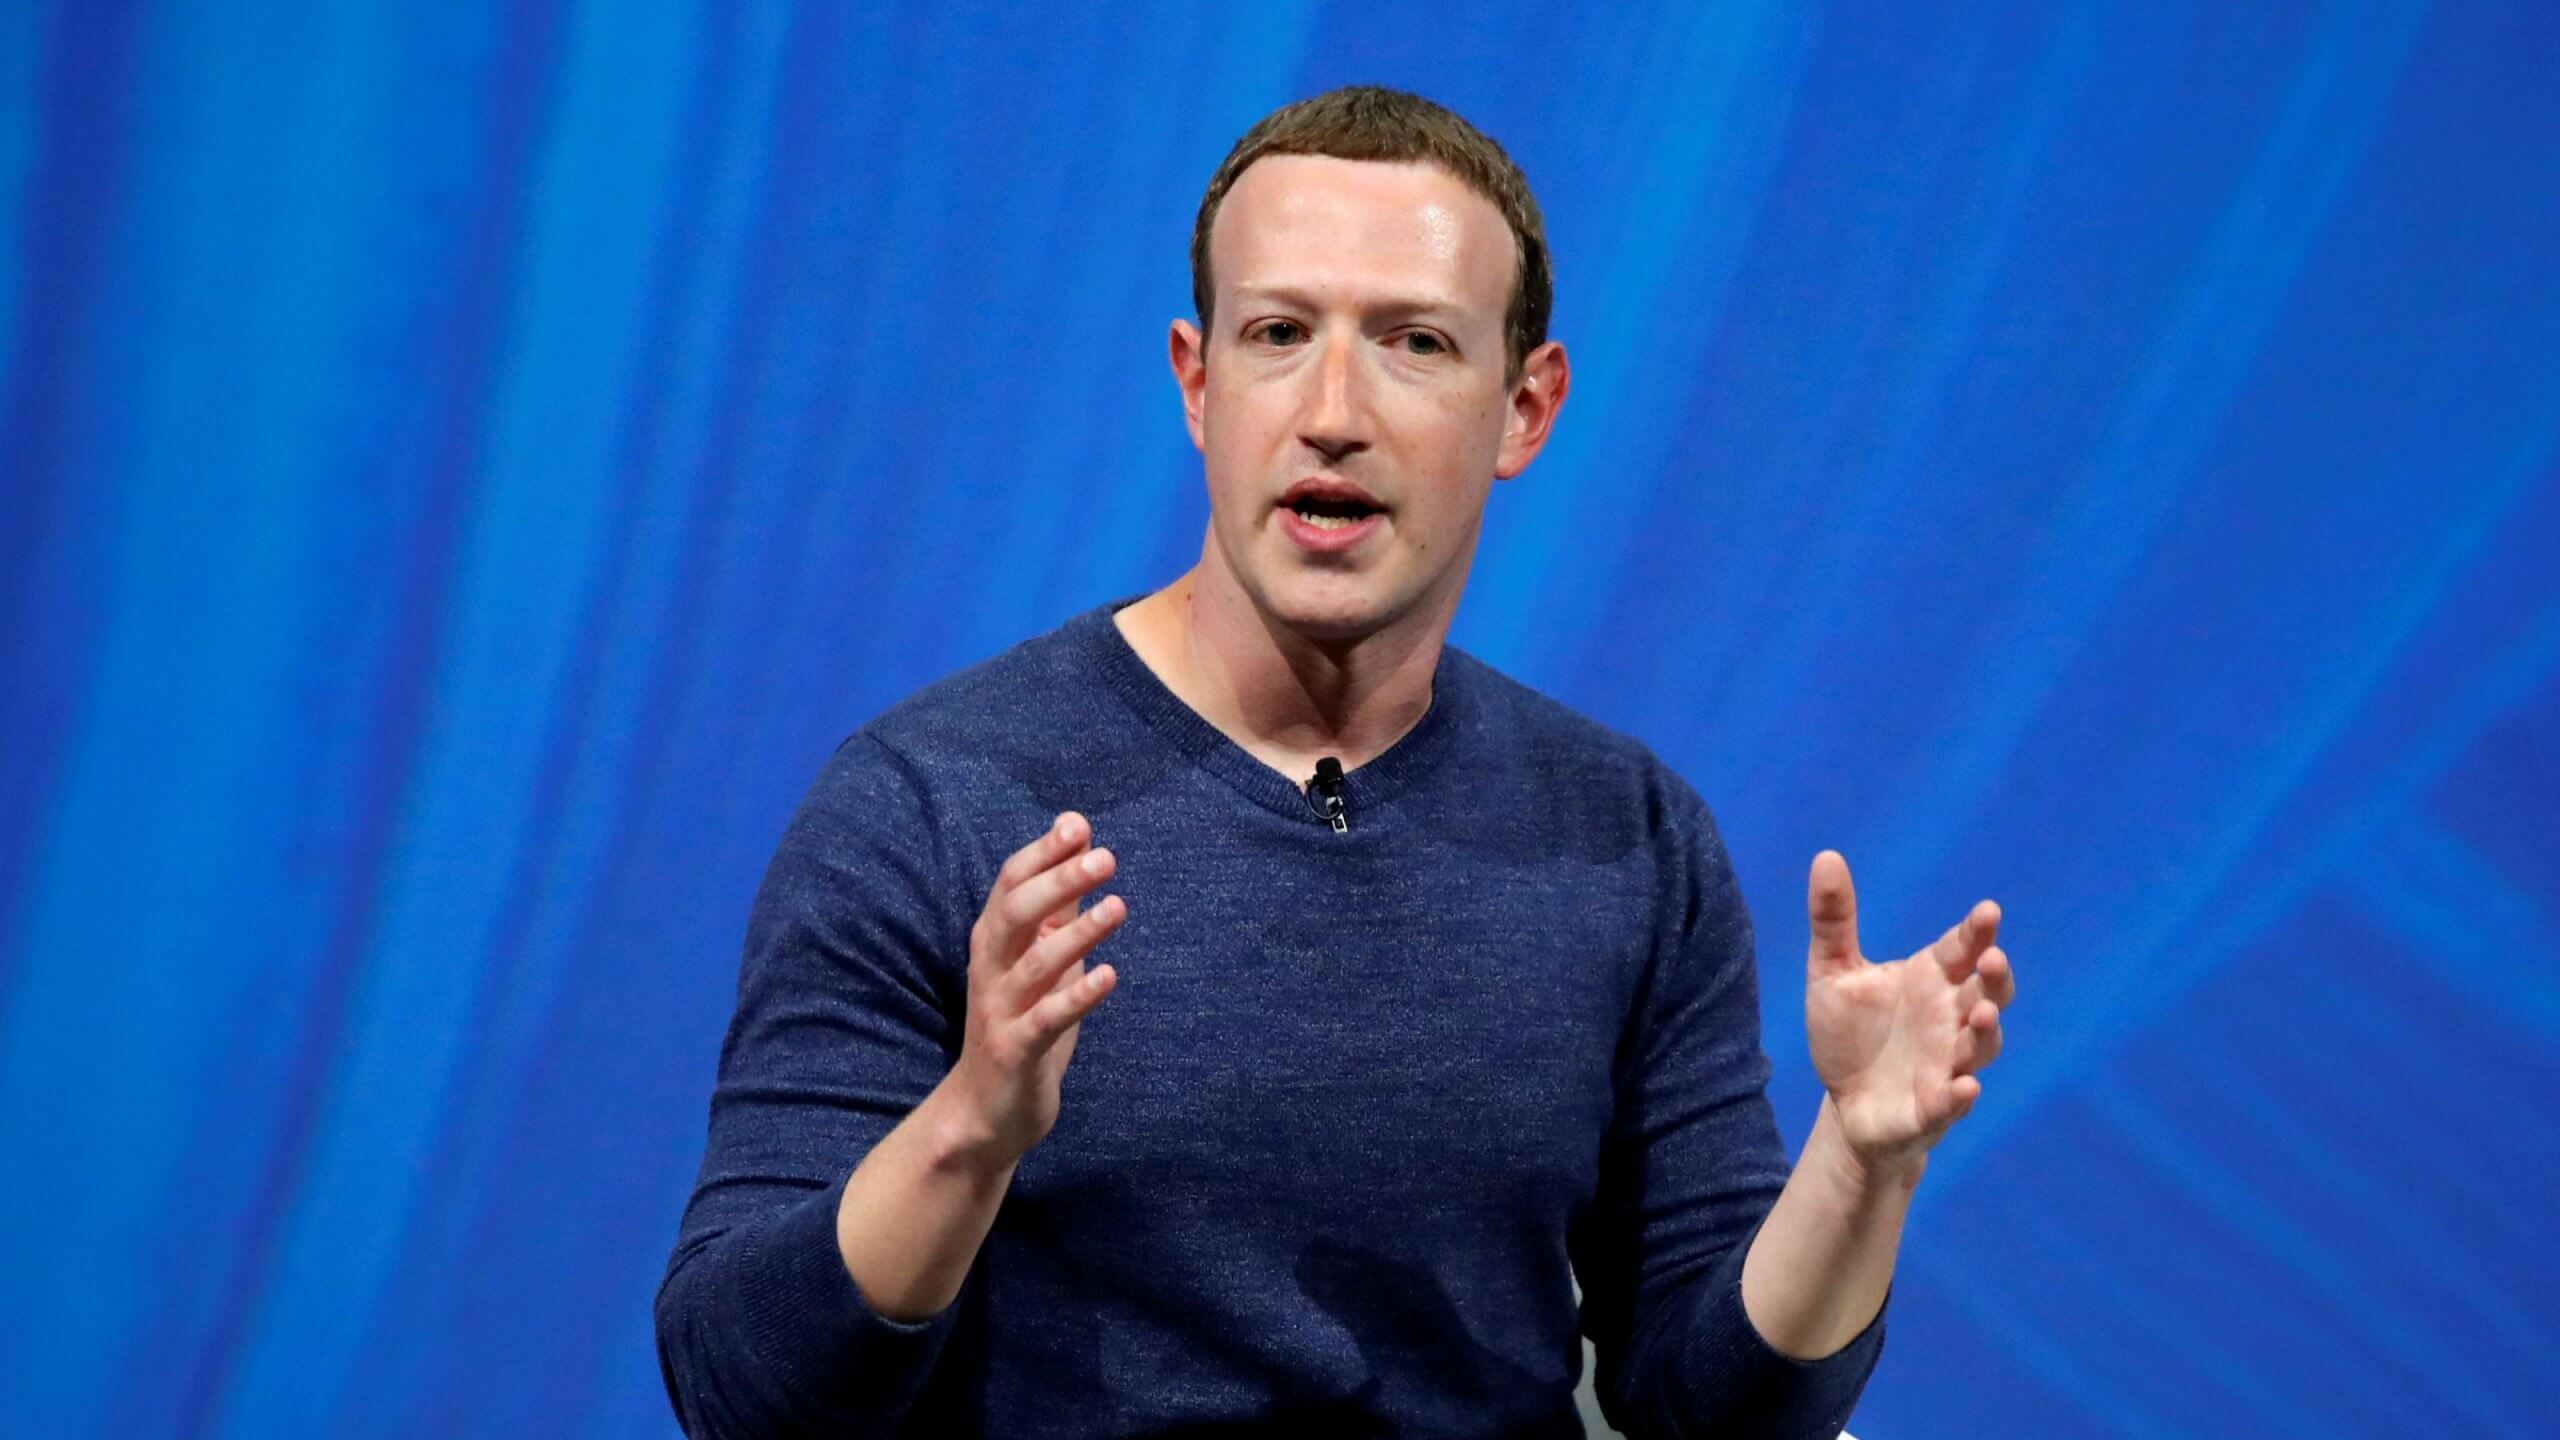 Meta spent $27 million on protecting Mark Zuckerberg and his family last year